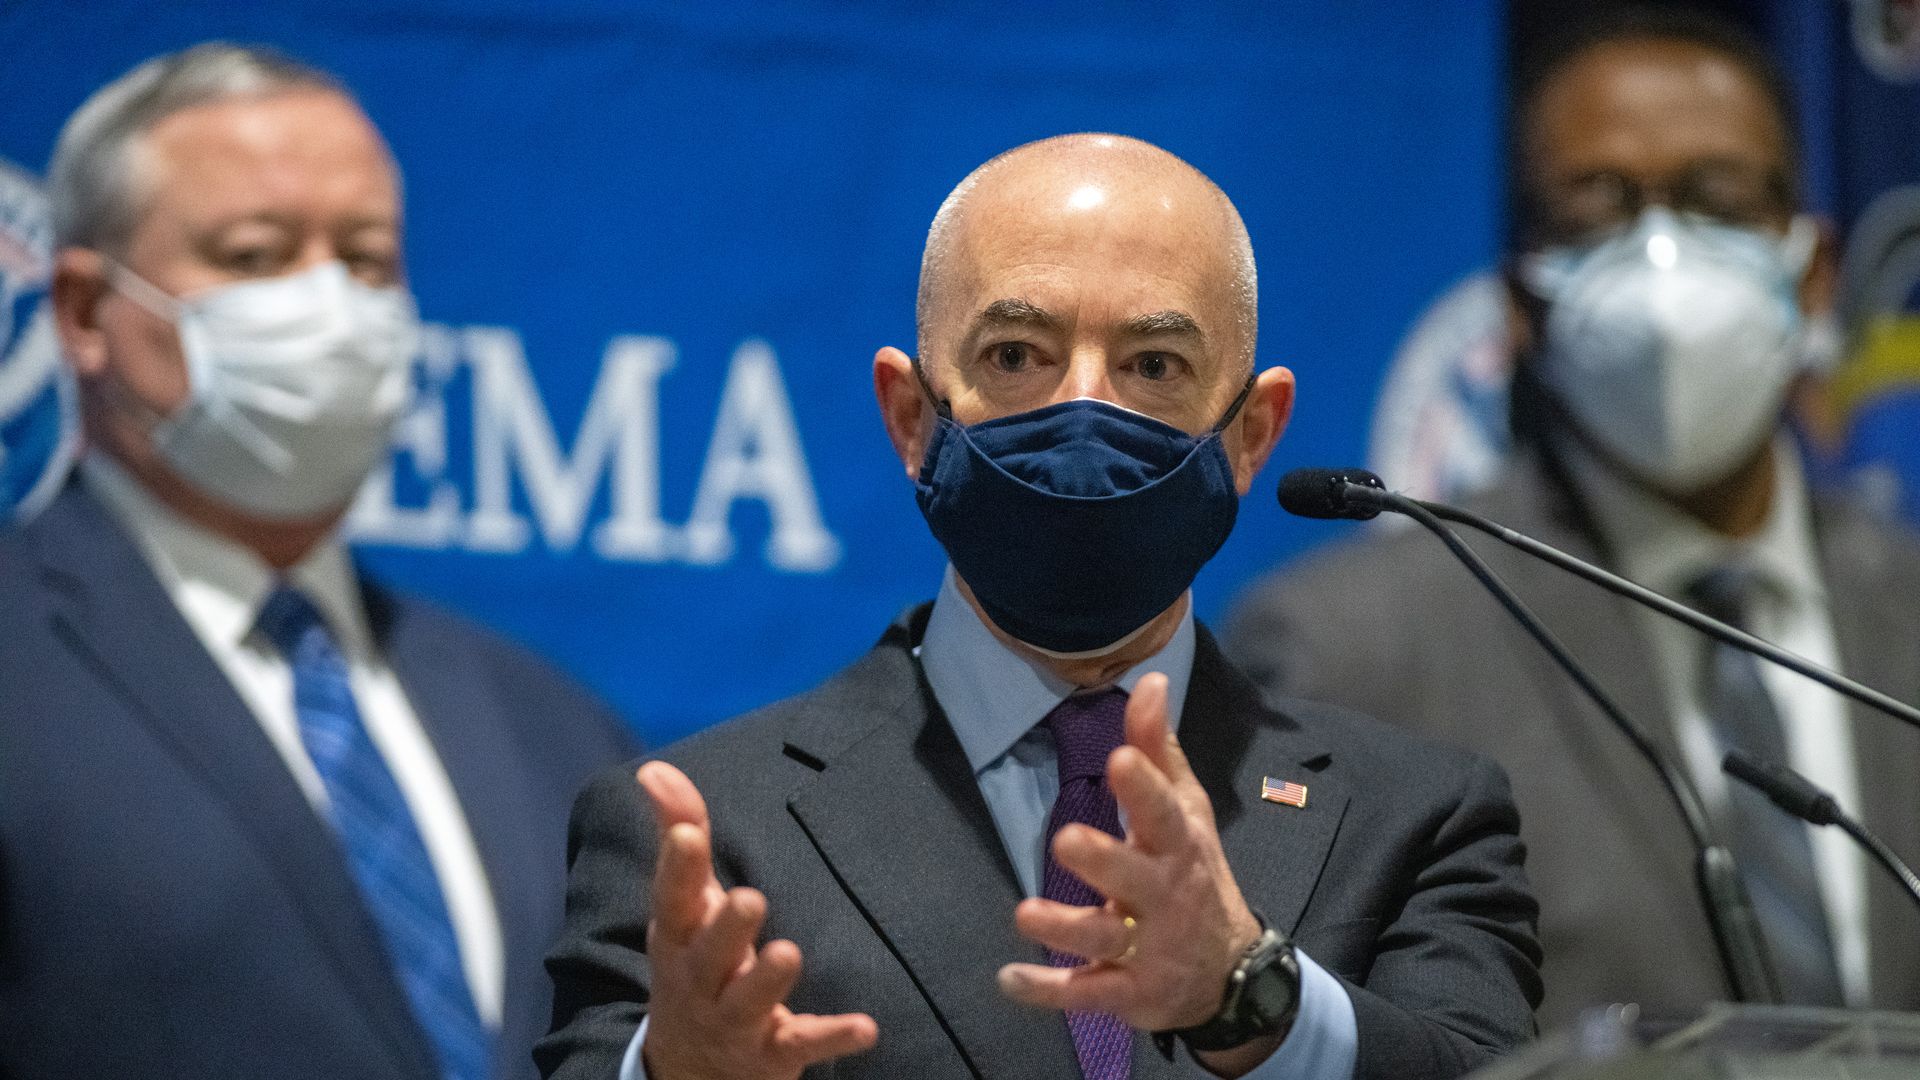 Homeland Security Secretary Alejandro Mayorkas in Philadelphia earlier this month. Photo: Mark Makela/Getty Images